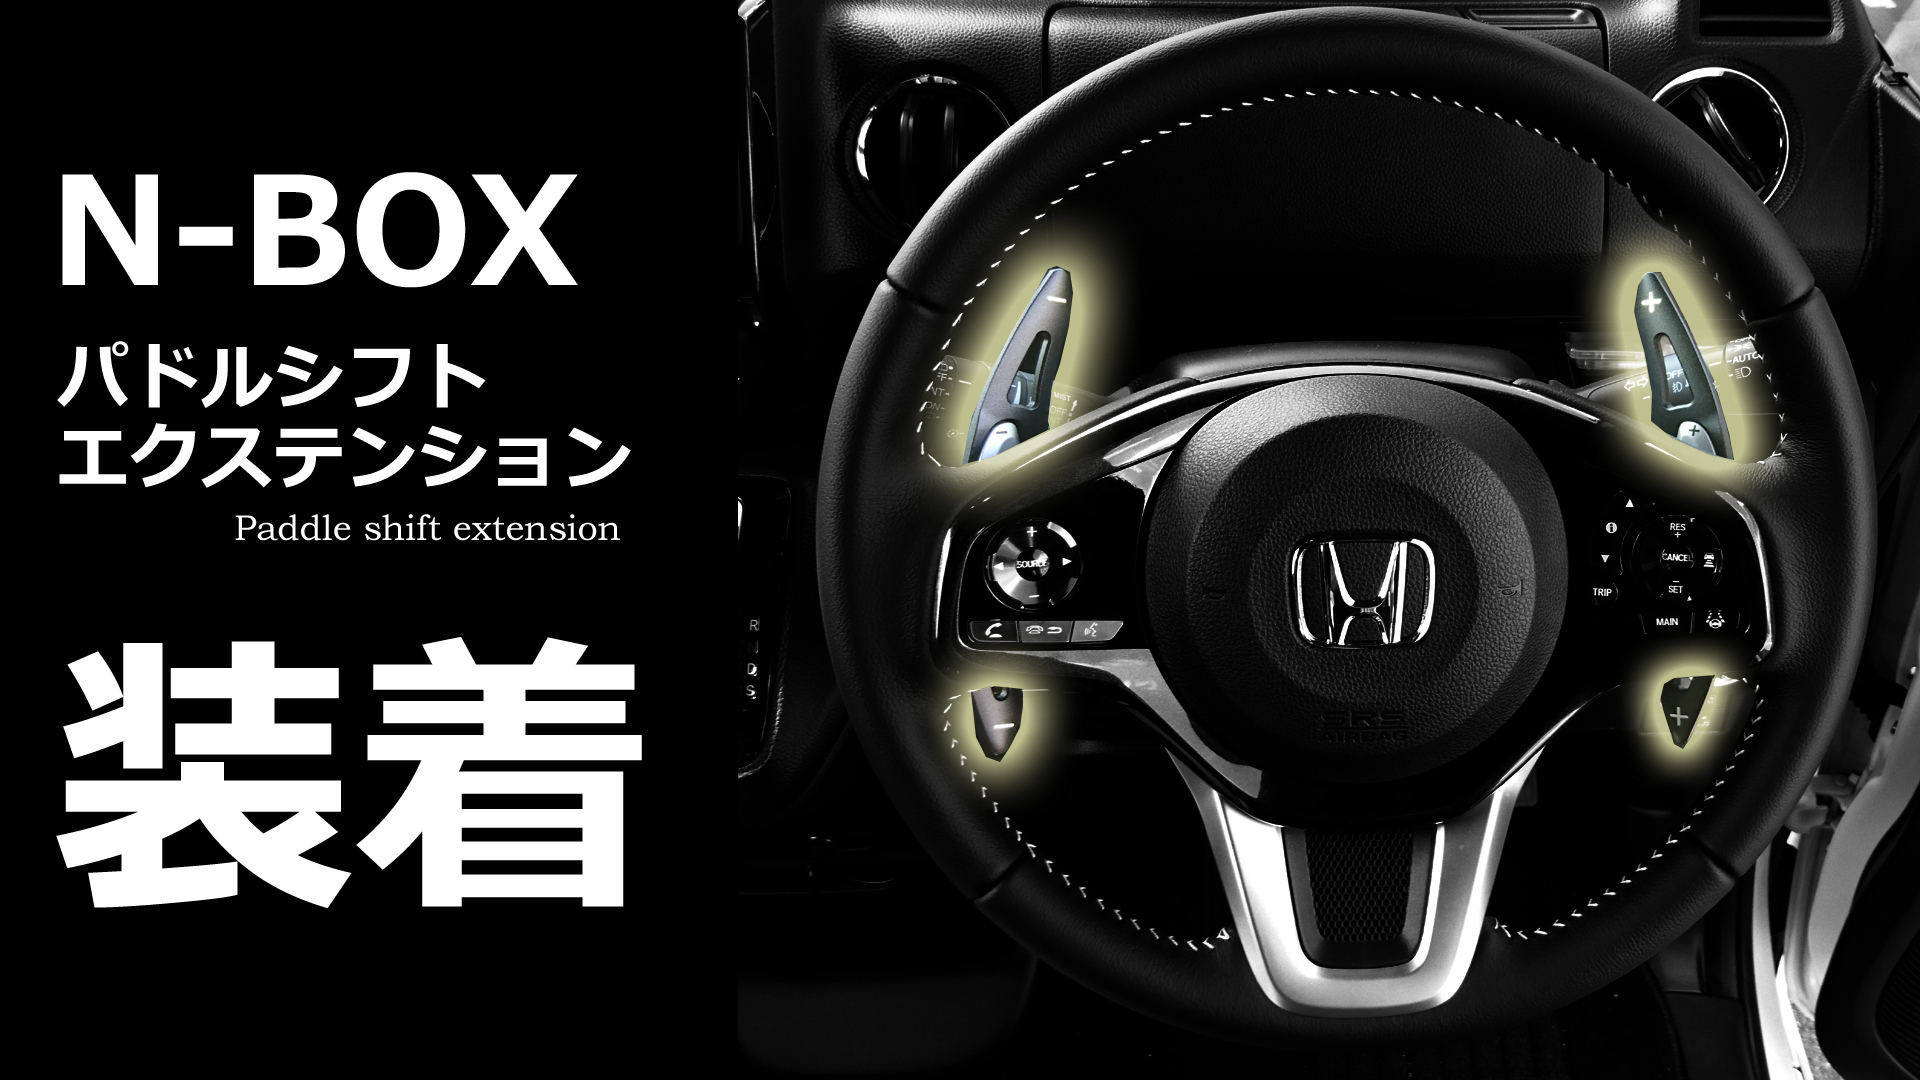 Honda N Box ターボ パドルシフトエクステンションで指が短いのをカバー Momotaro Blog